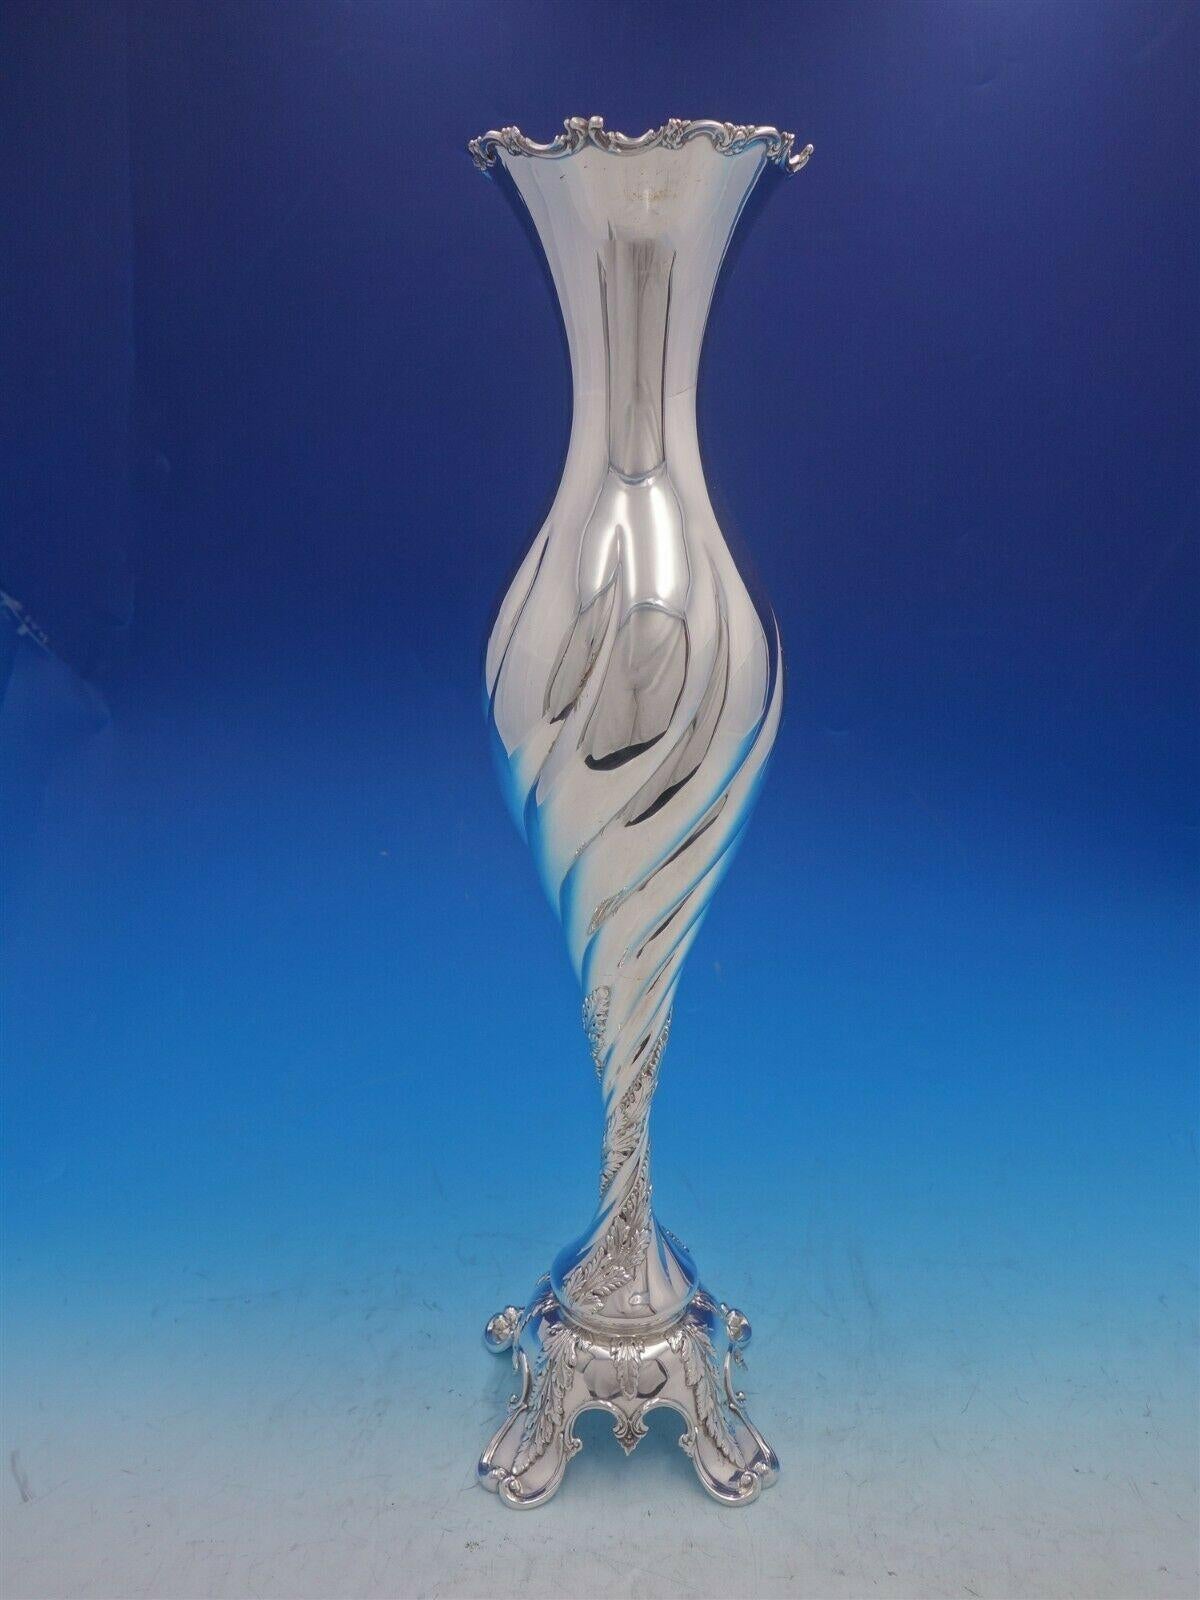 Tiffany & Co.

Unglaubliche monumentale Tiffany & Co. Sterling Silber Vase markiert #12497 1451. Er misst beeindruckende 21